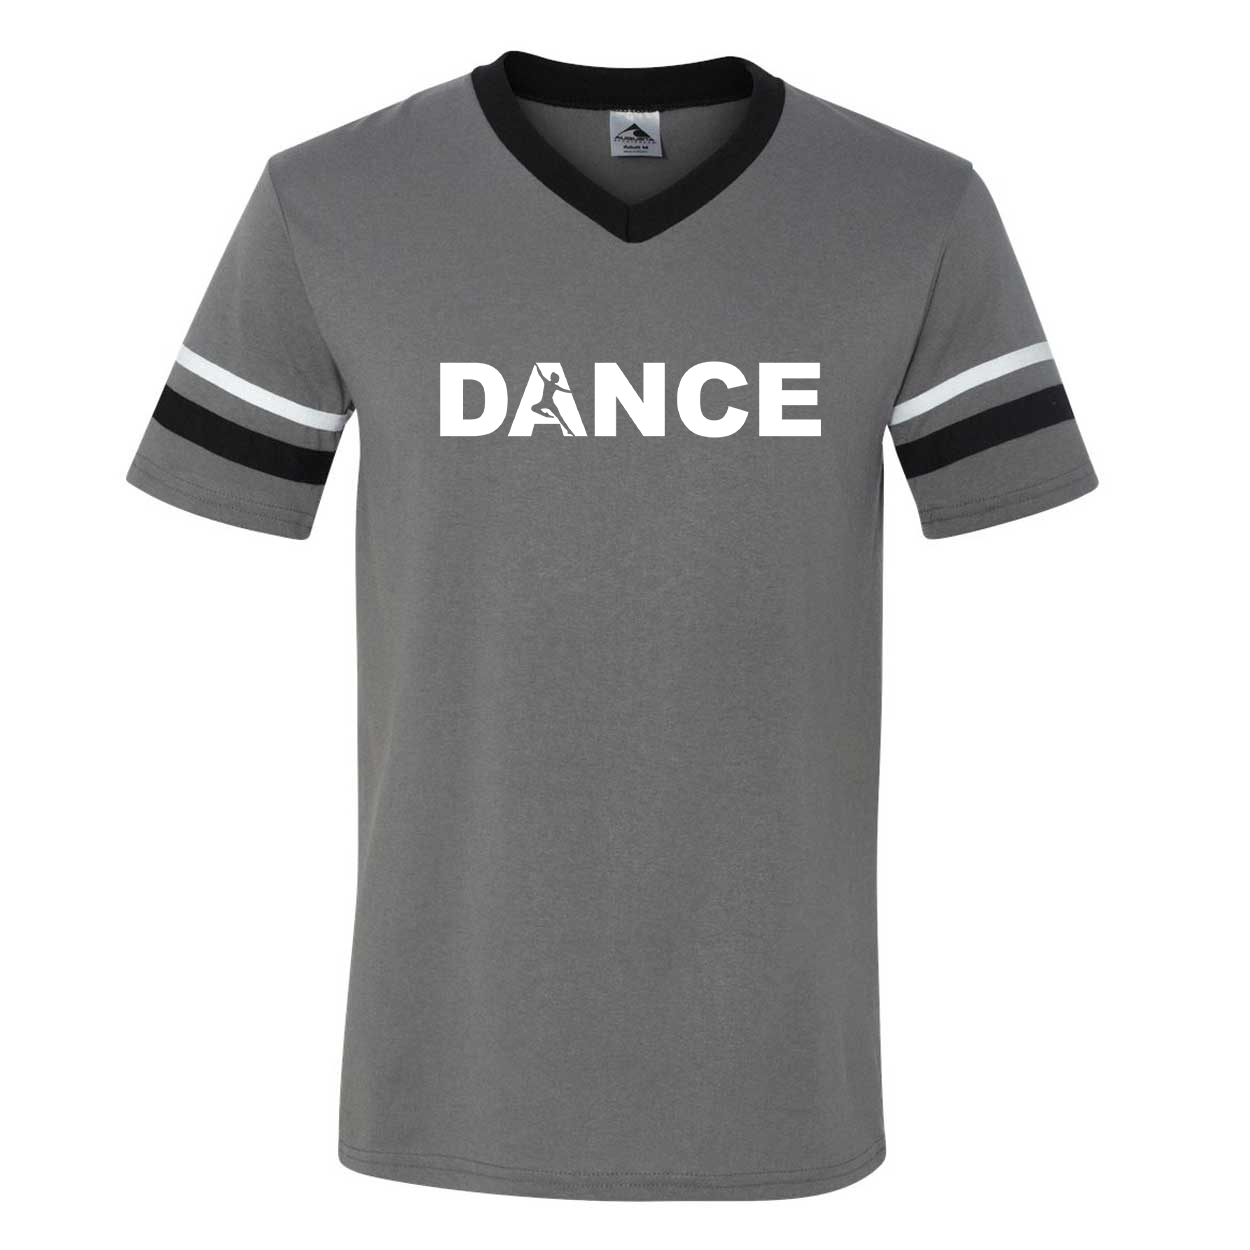 Dance Silhouette Logo Classic Premium Striped Jersey T-Shirt Graphite/Black/White (White Logo)